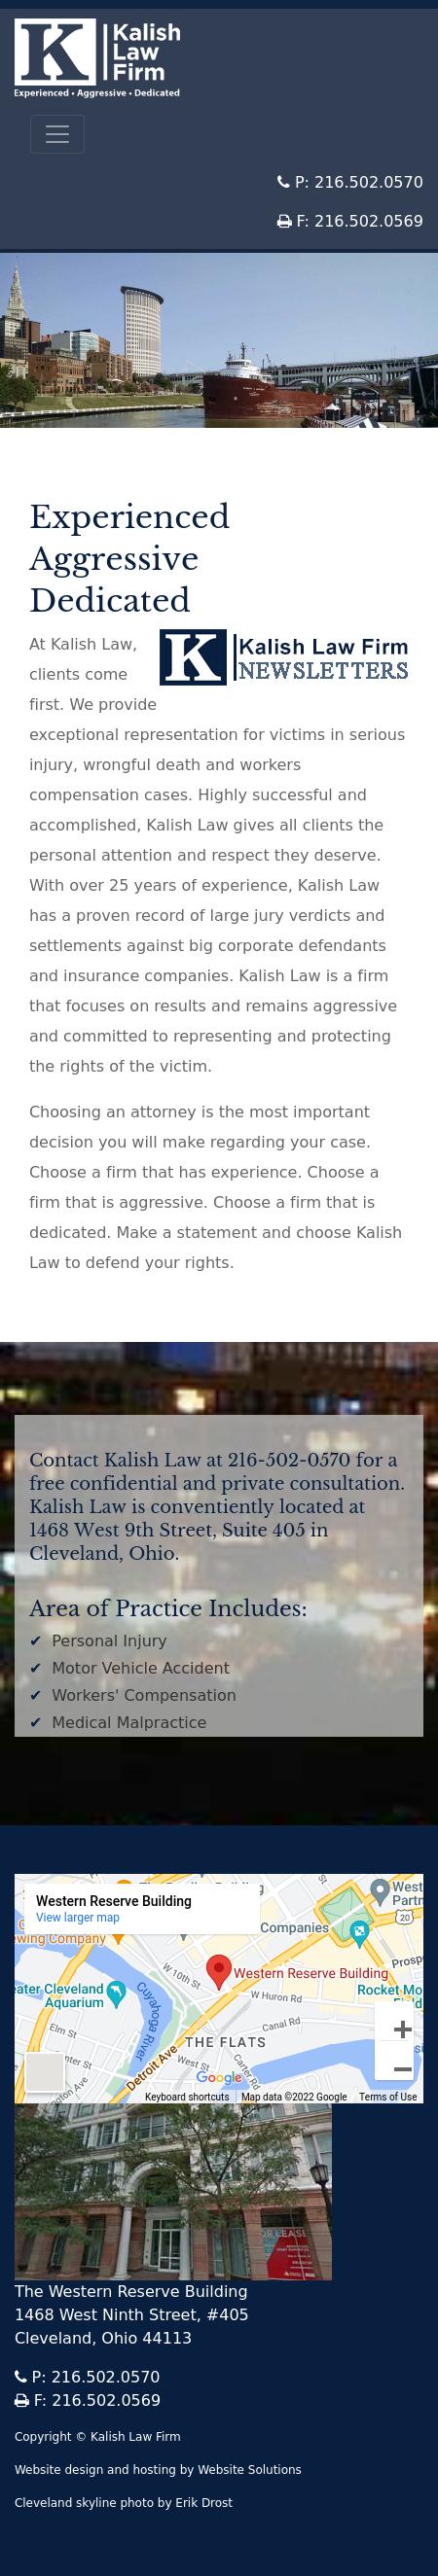 Kalish Scott - Cleveland OH Lawyers